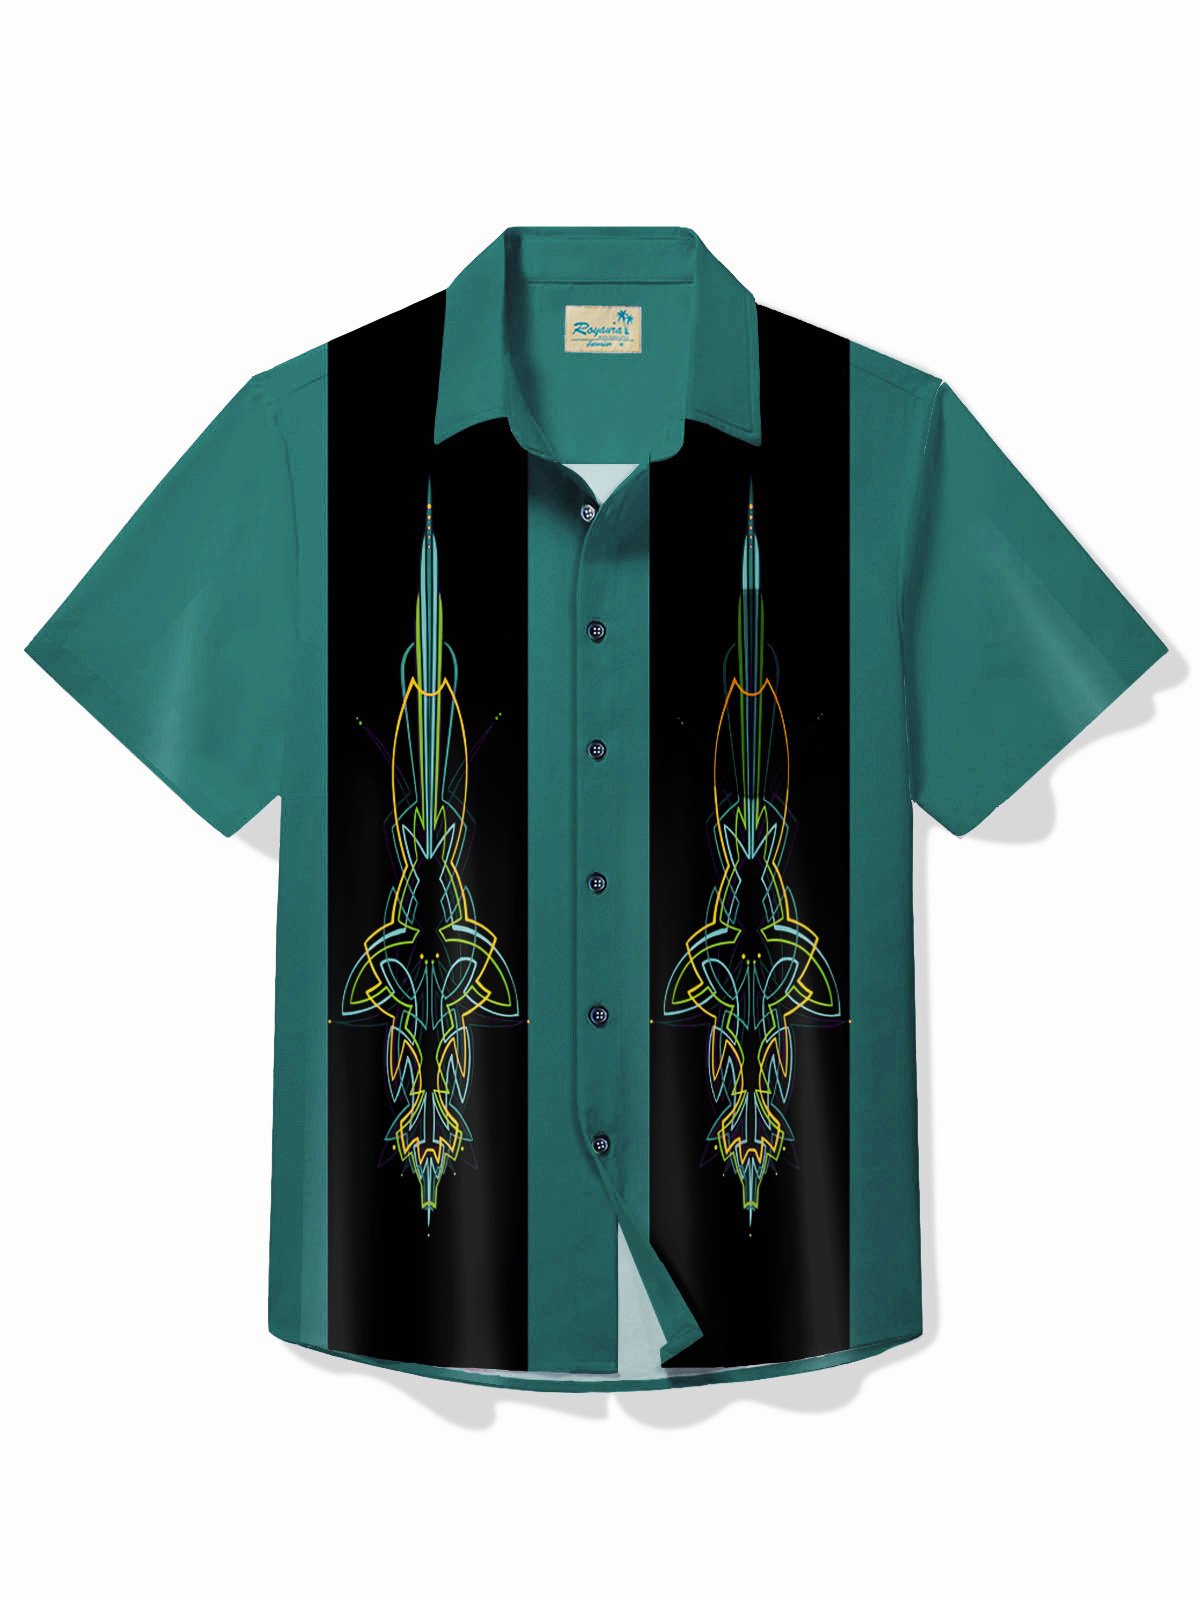 Royaura® 50's Retro Pinstripe Car Men's Bowling Shirt Art Stretch Pocket Camp Shirt Big Tall